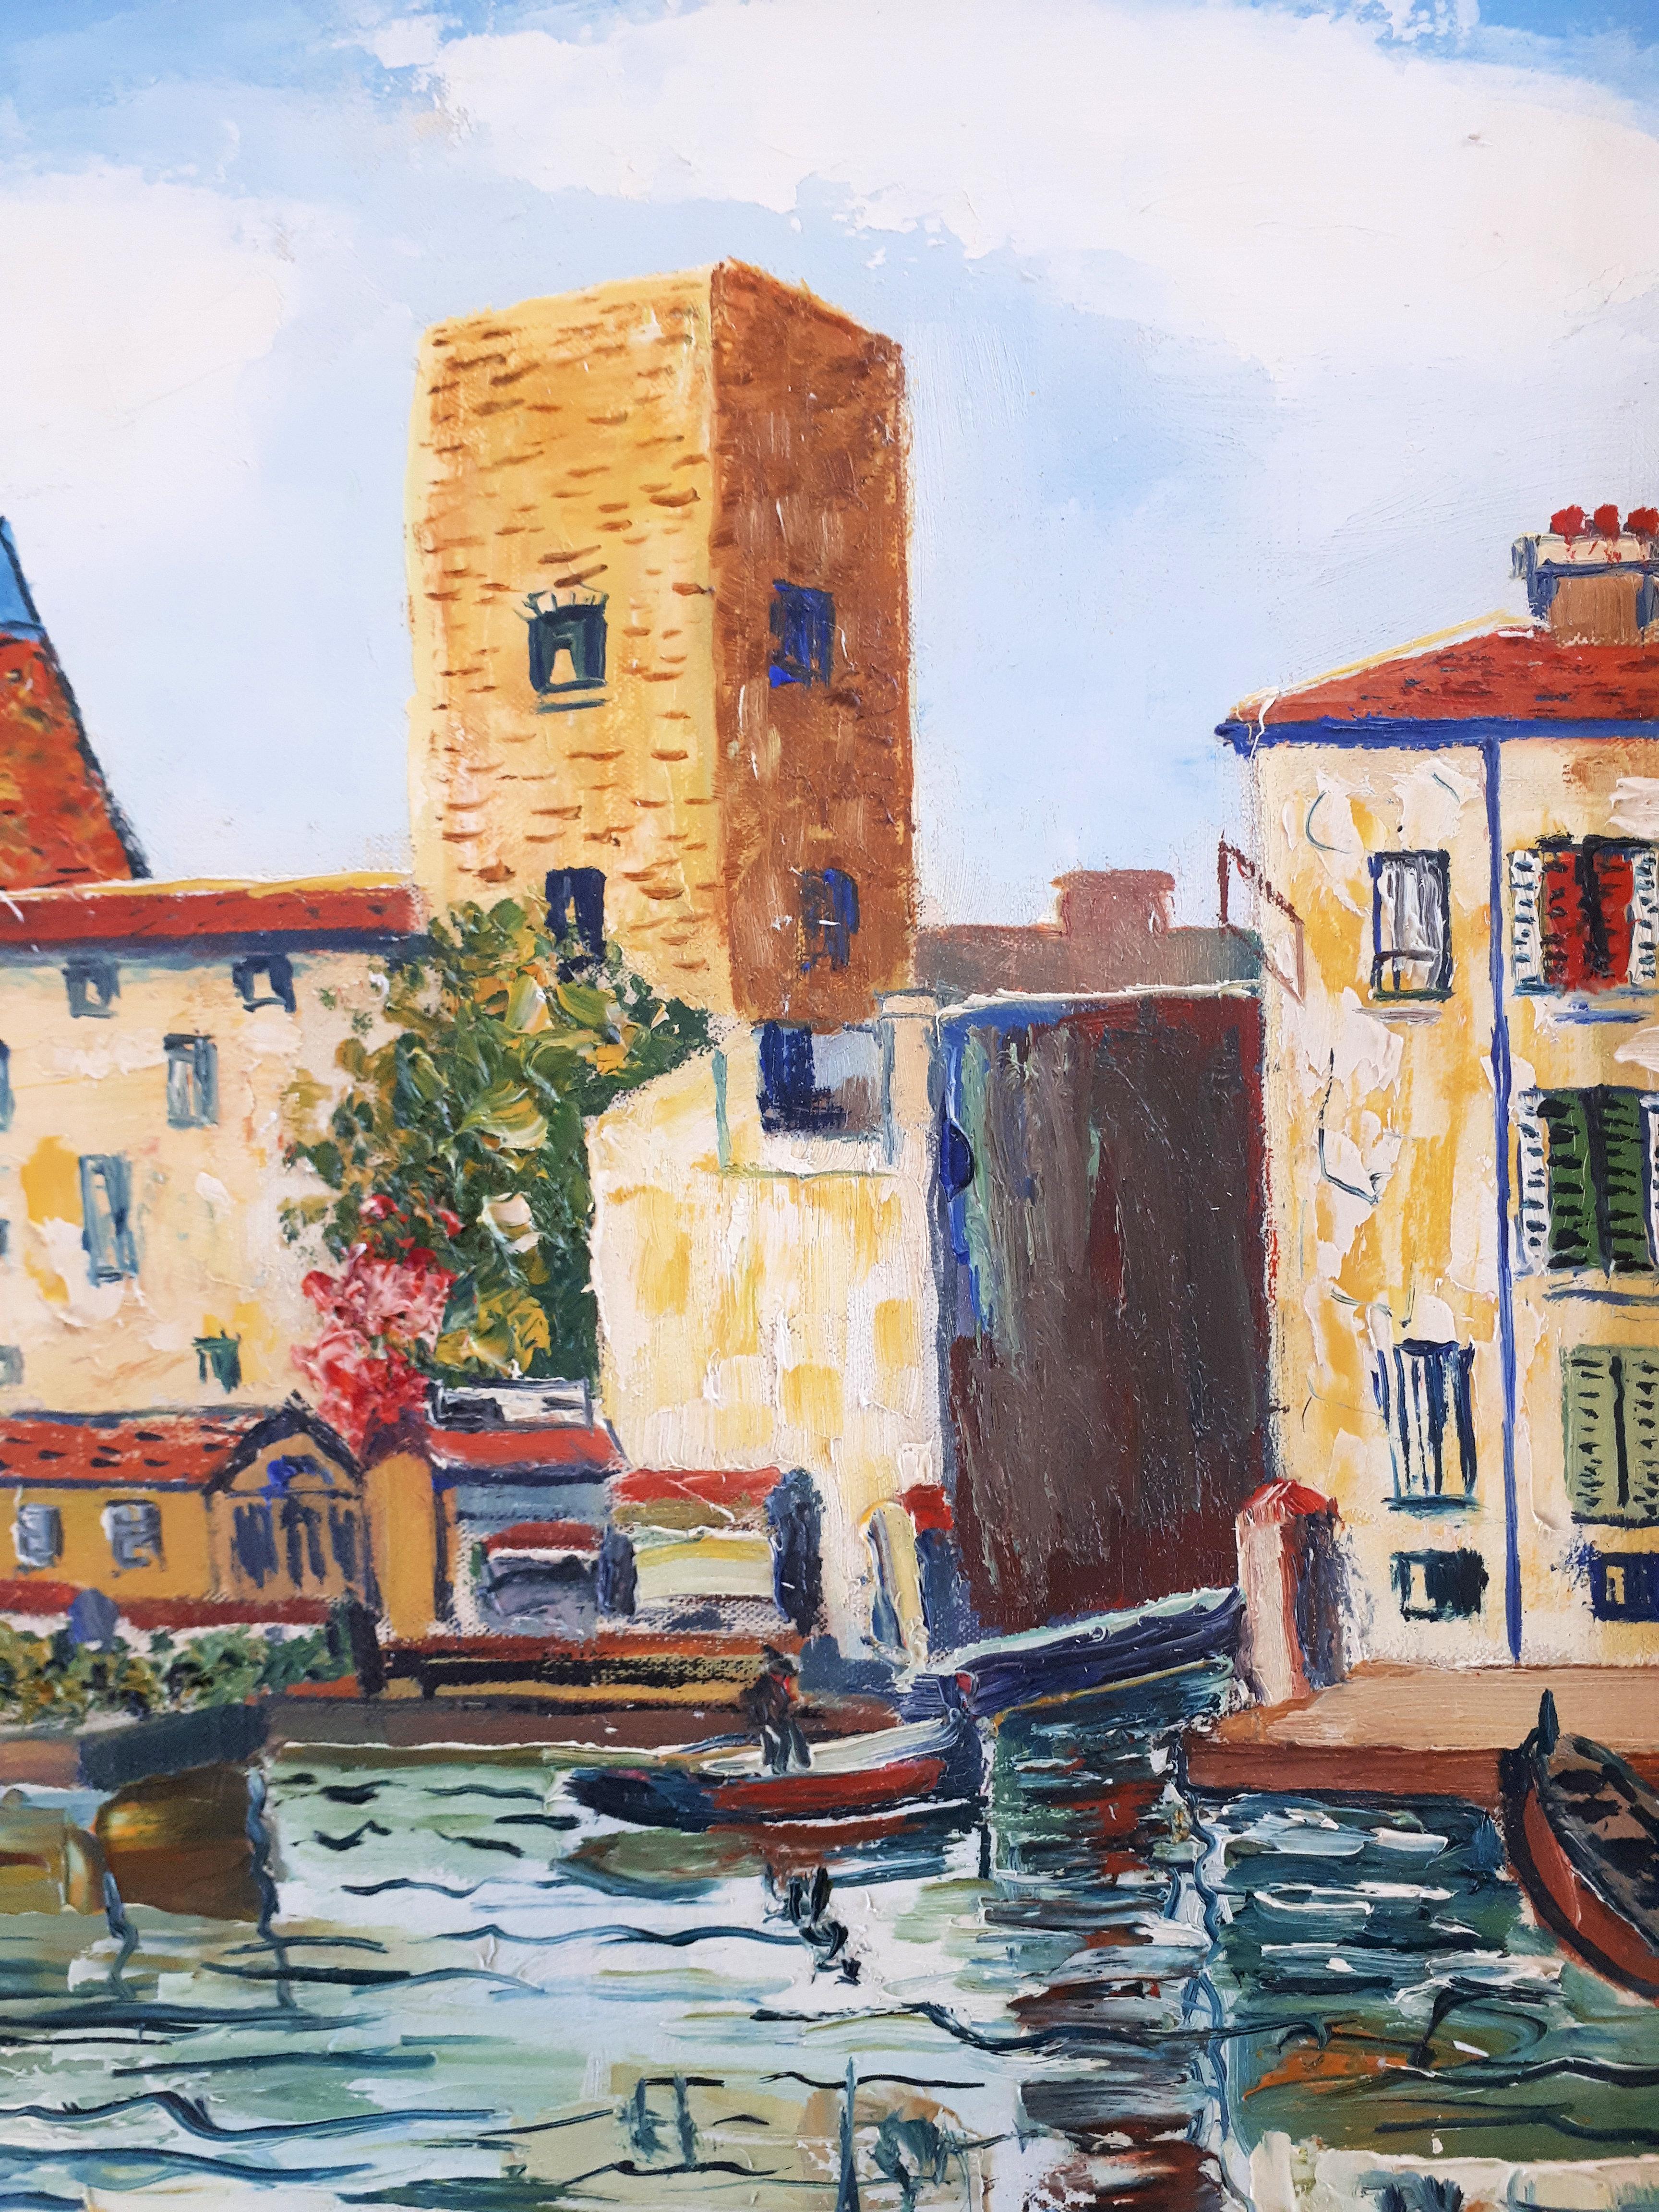 Nemours (Little Venice in France) - Original oil on canvas - Signed 2